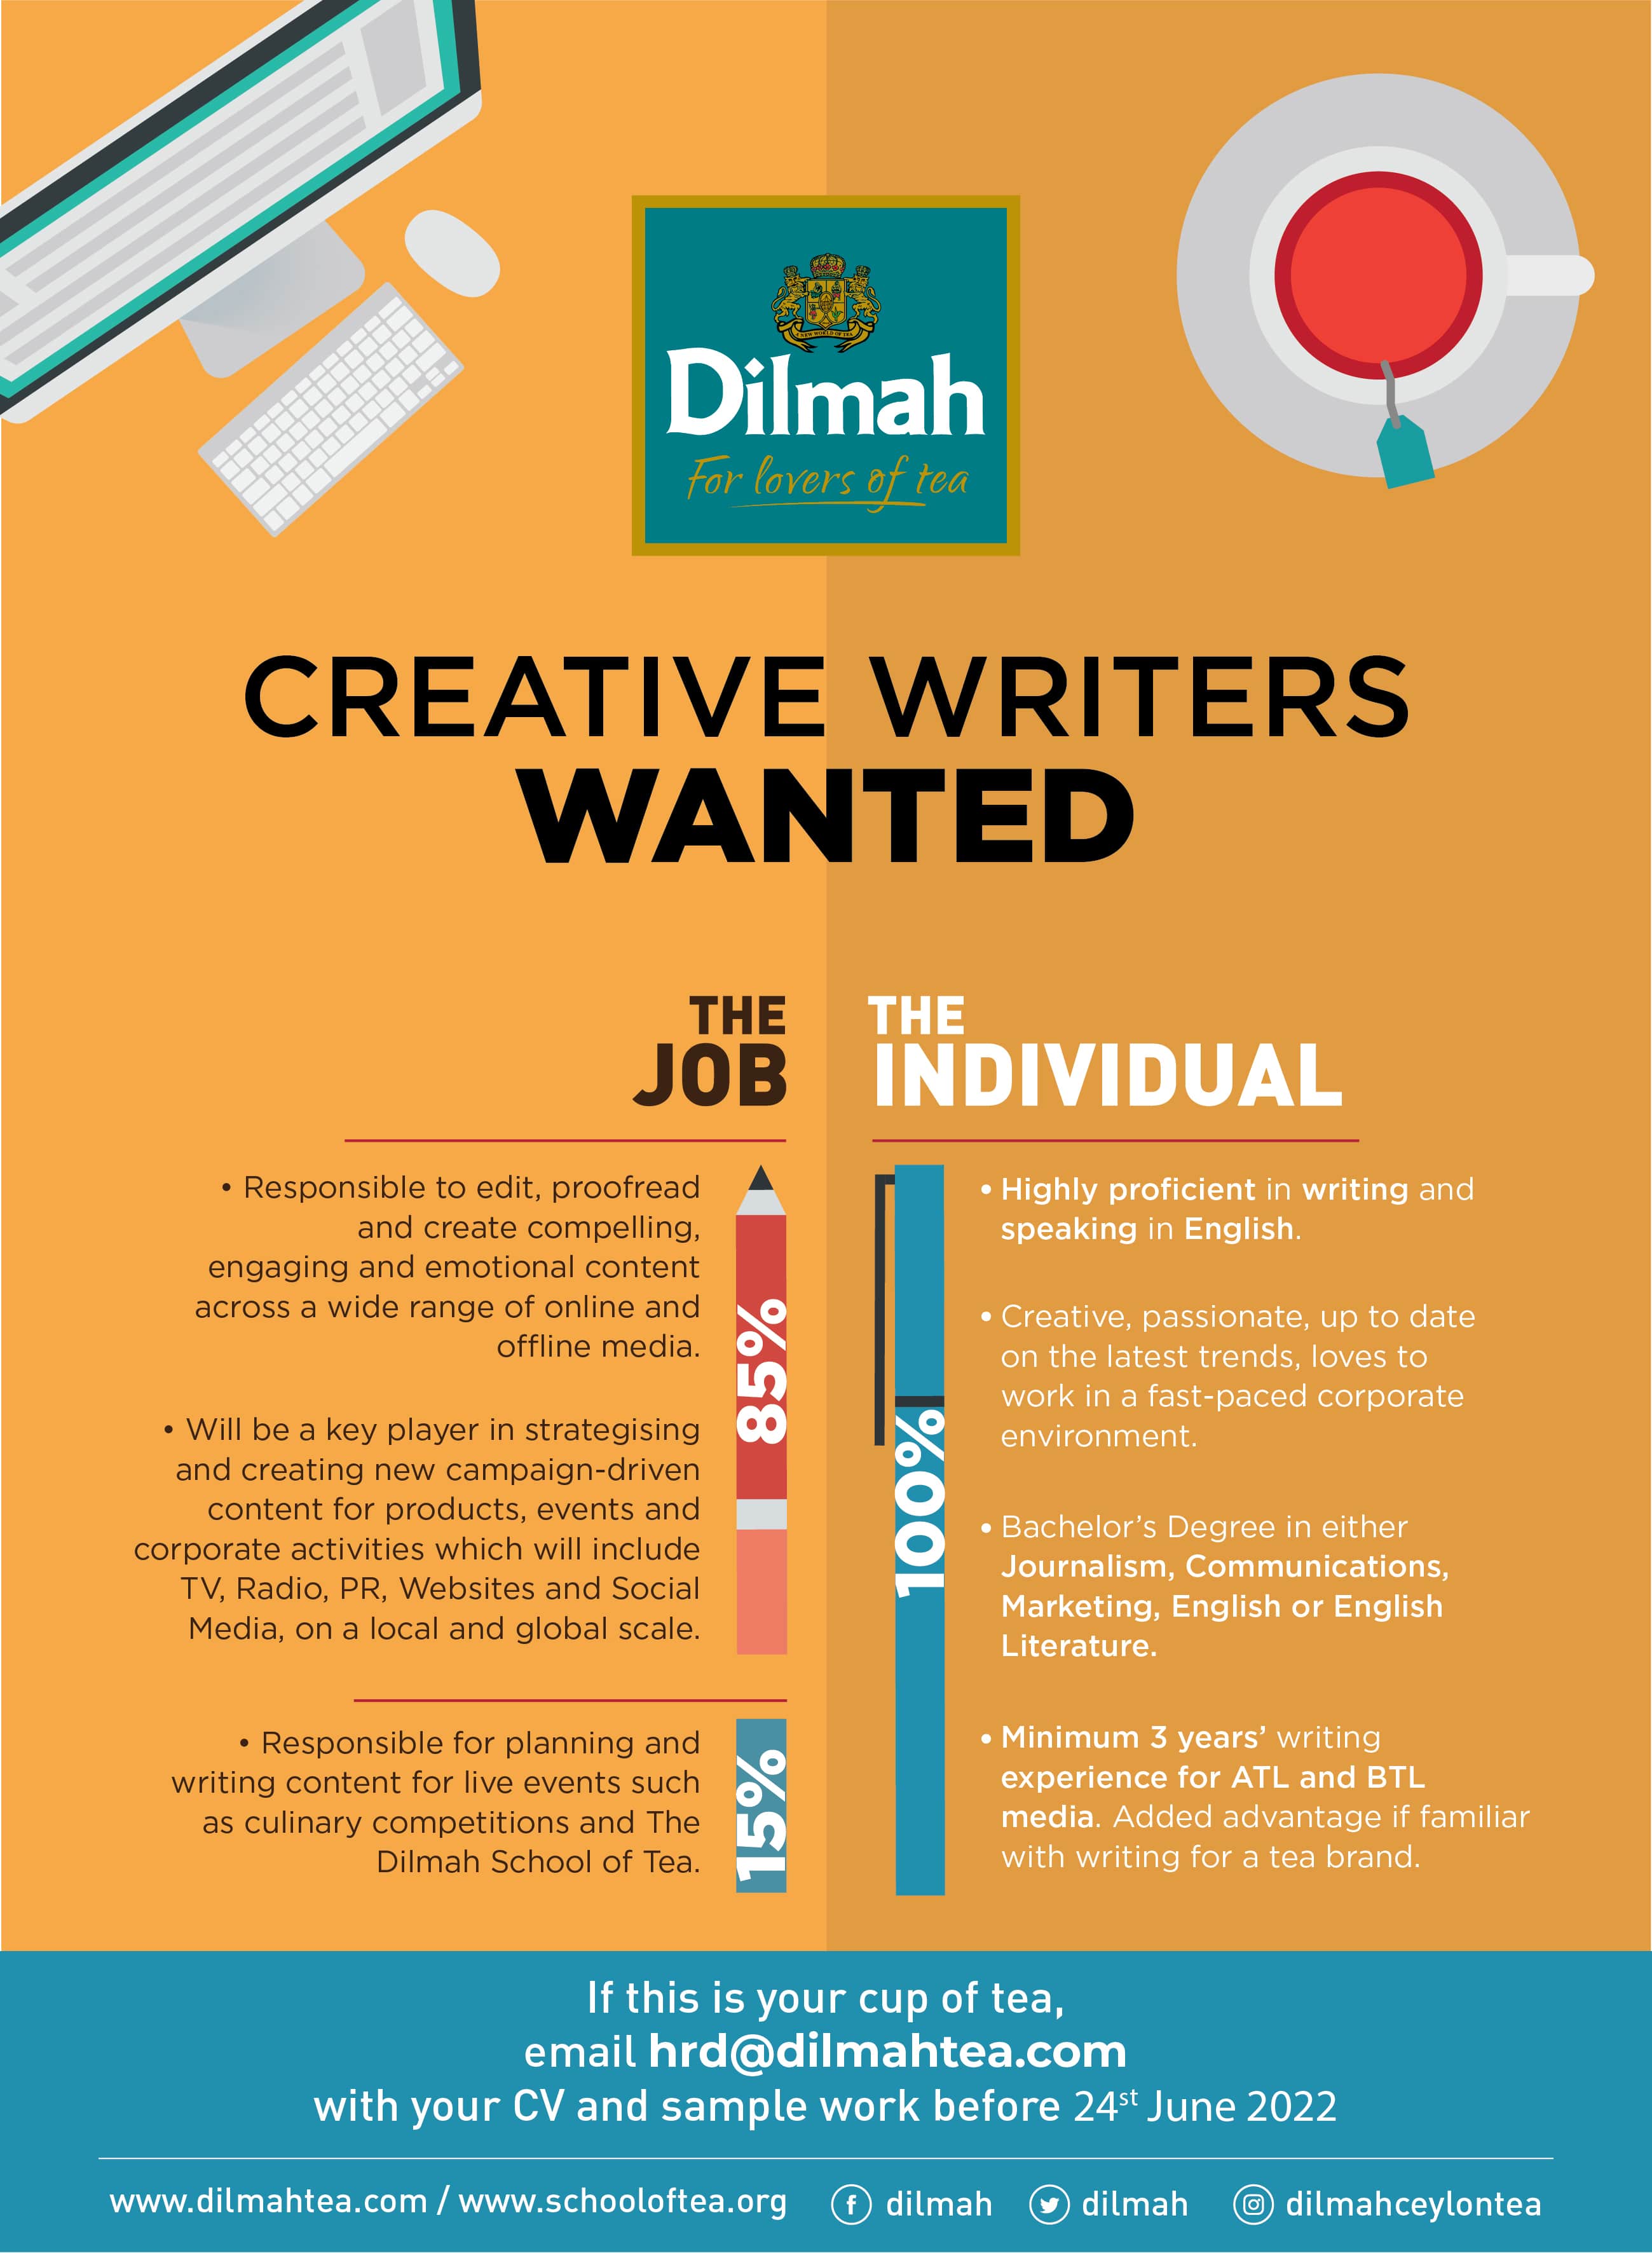 Creative Writer Job Vacancy - Dilmah Ceylon Tea Company Jobs Vacancies Details